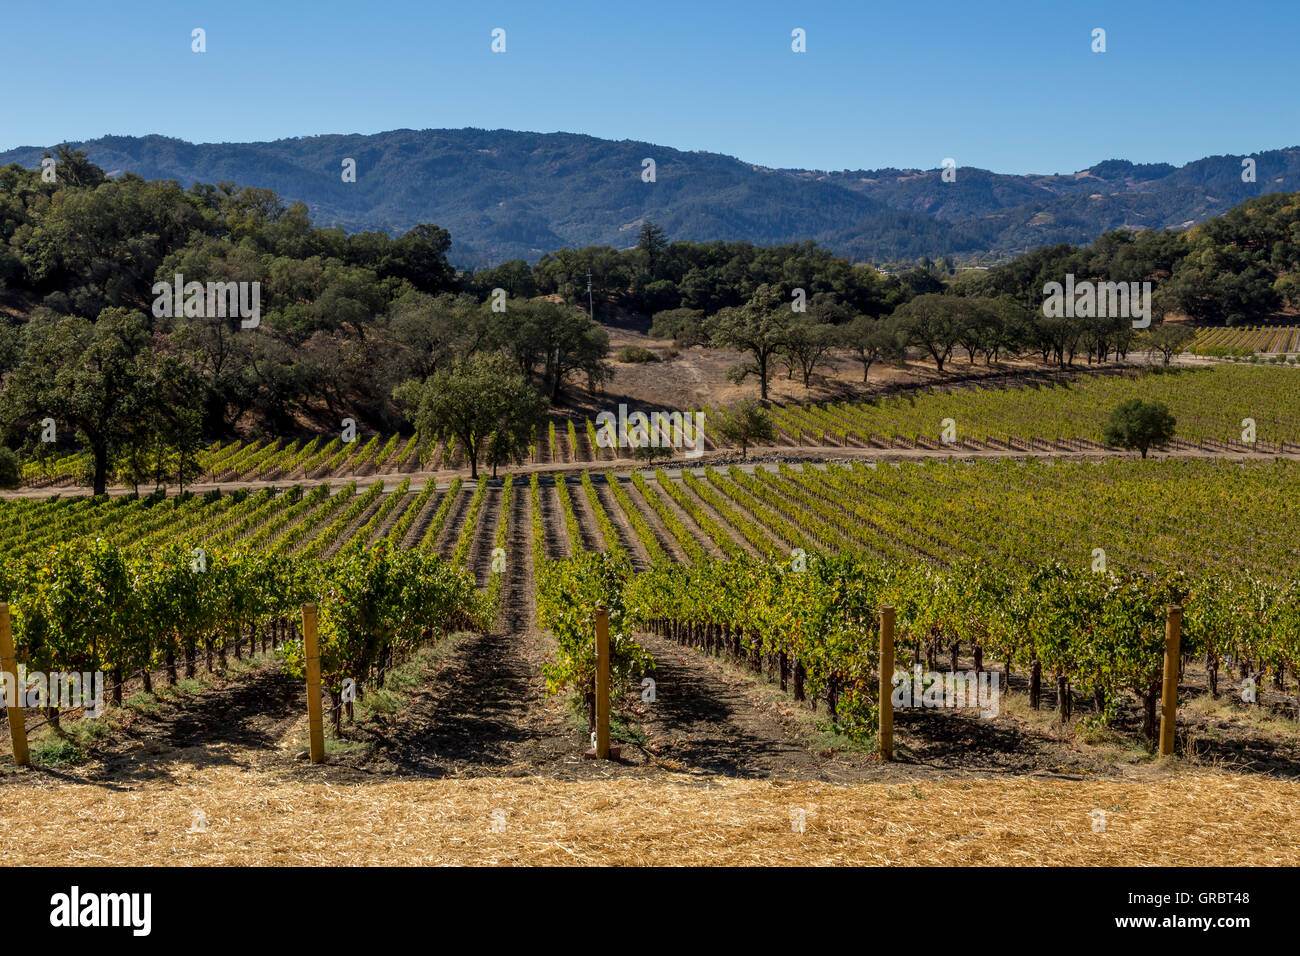 grape vineyard, grape vineyards, vineyards, view from outdoor tasting terrace, Joseph Phelps Vineyards, Saint Helena, Napa Valley, California Stock Photo